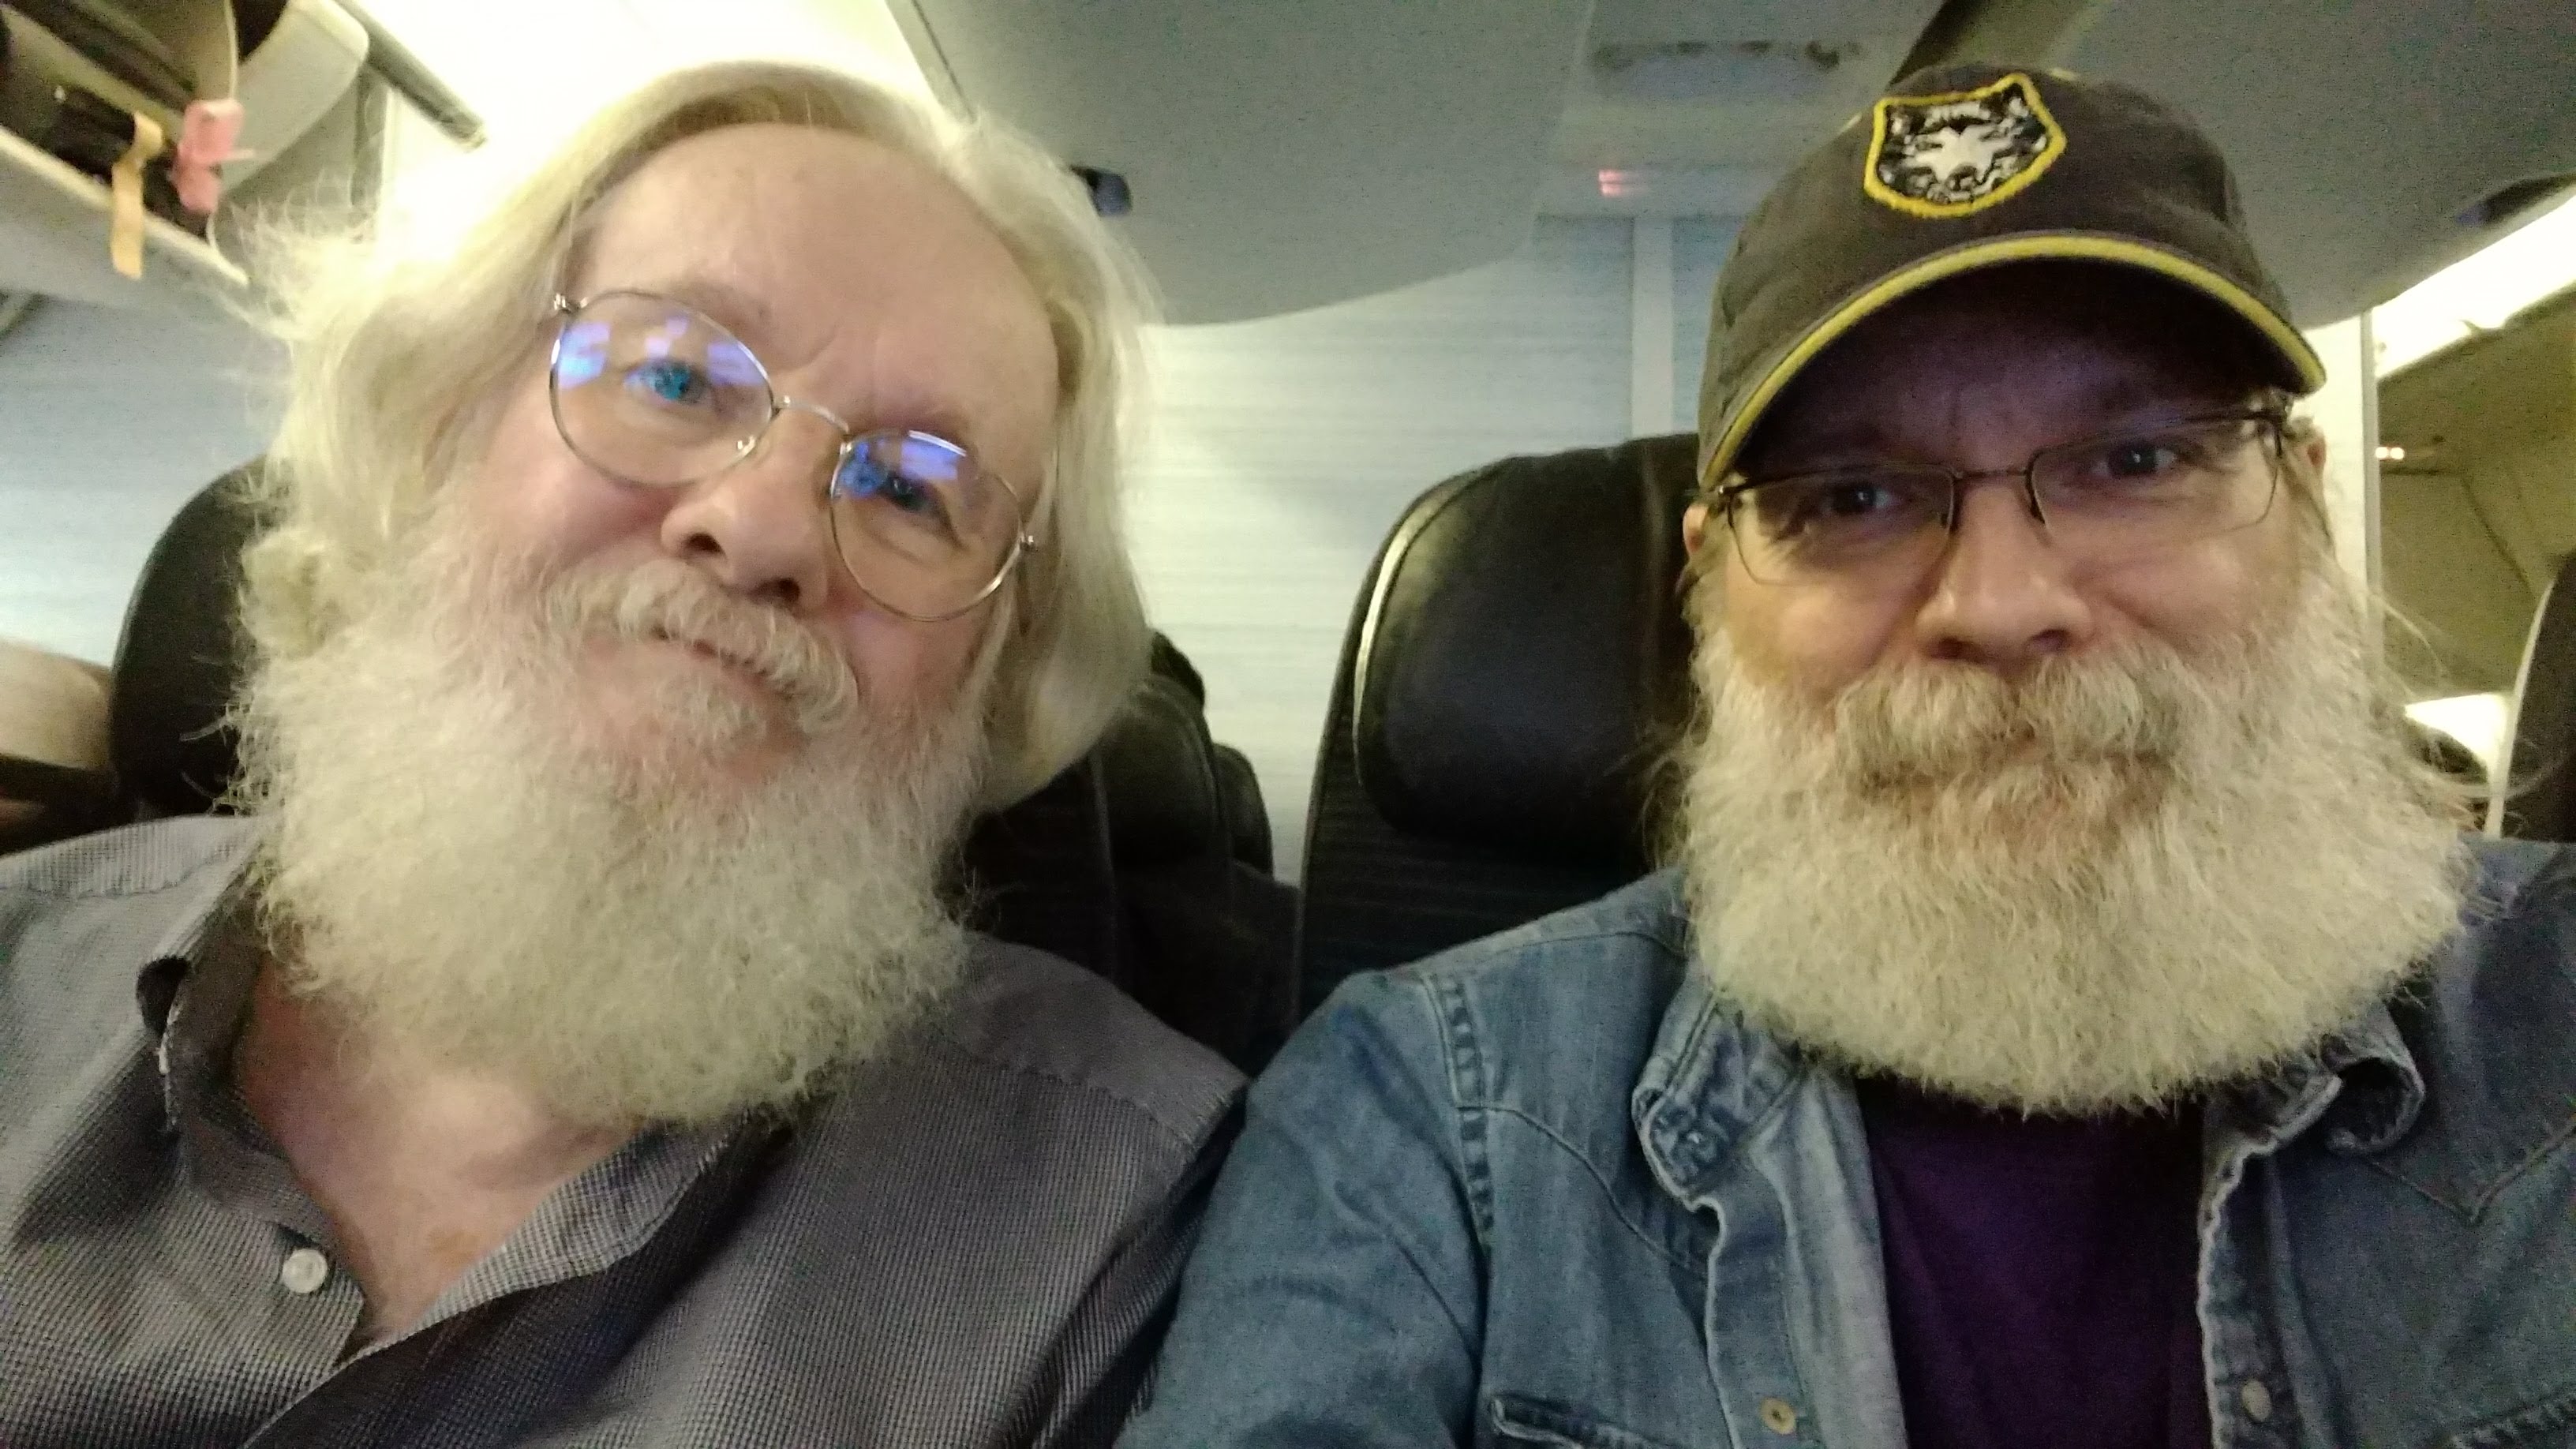 chris and earl on the plane